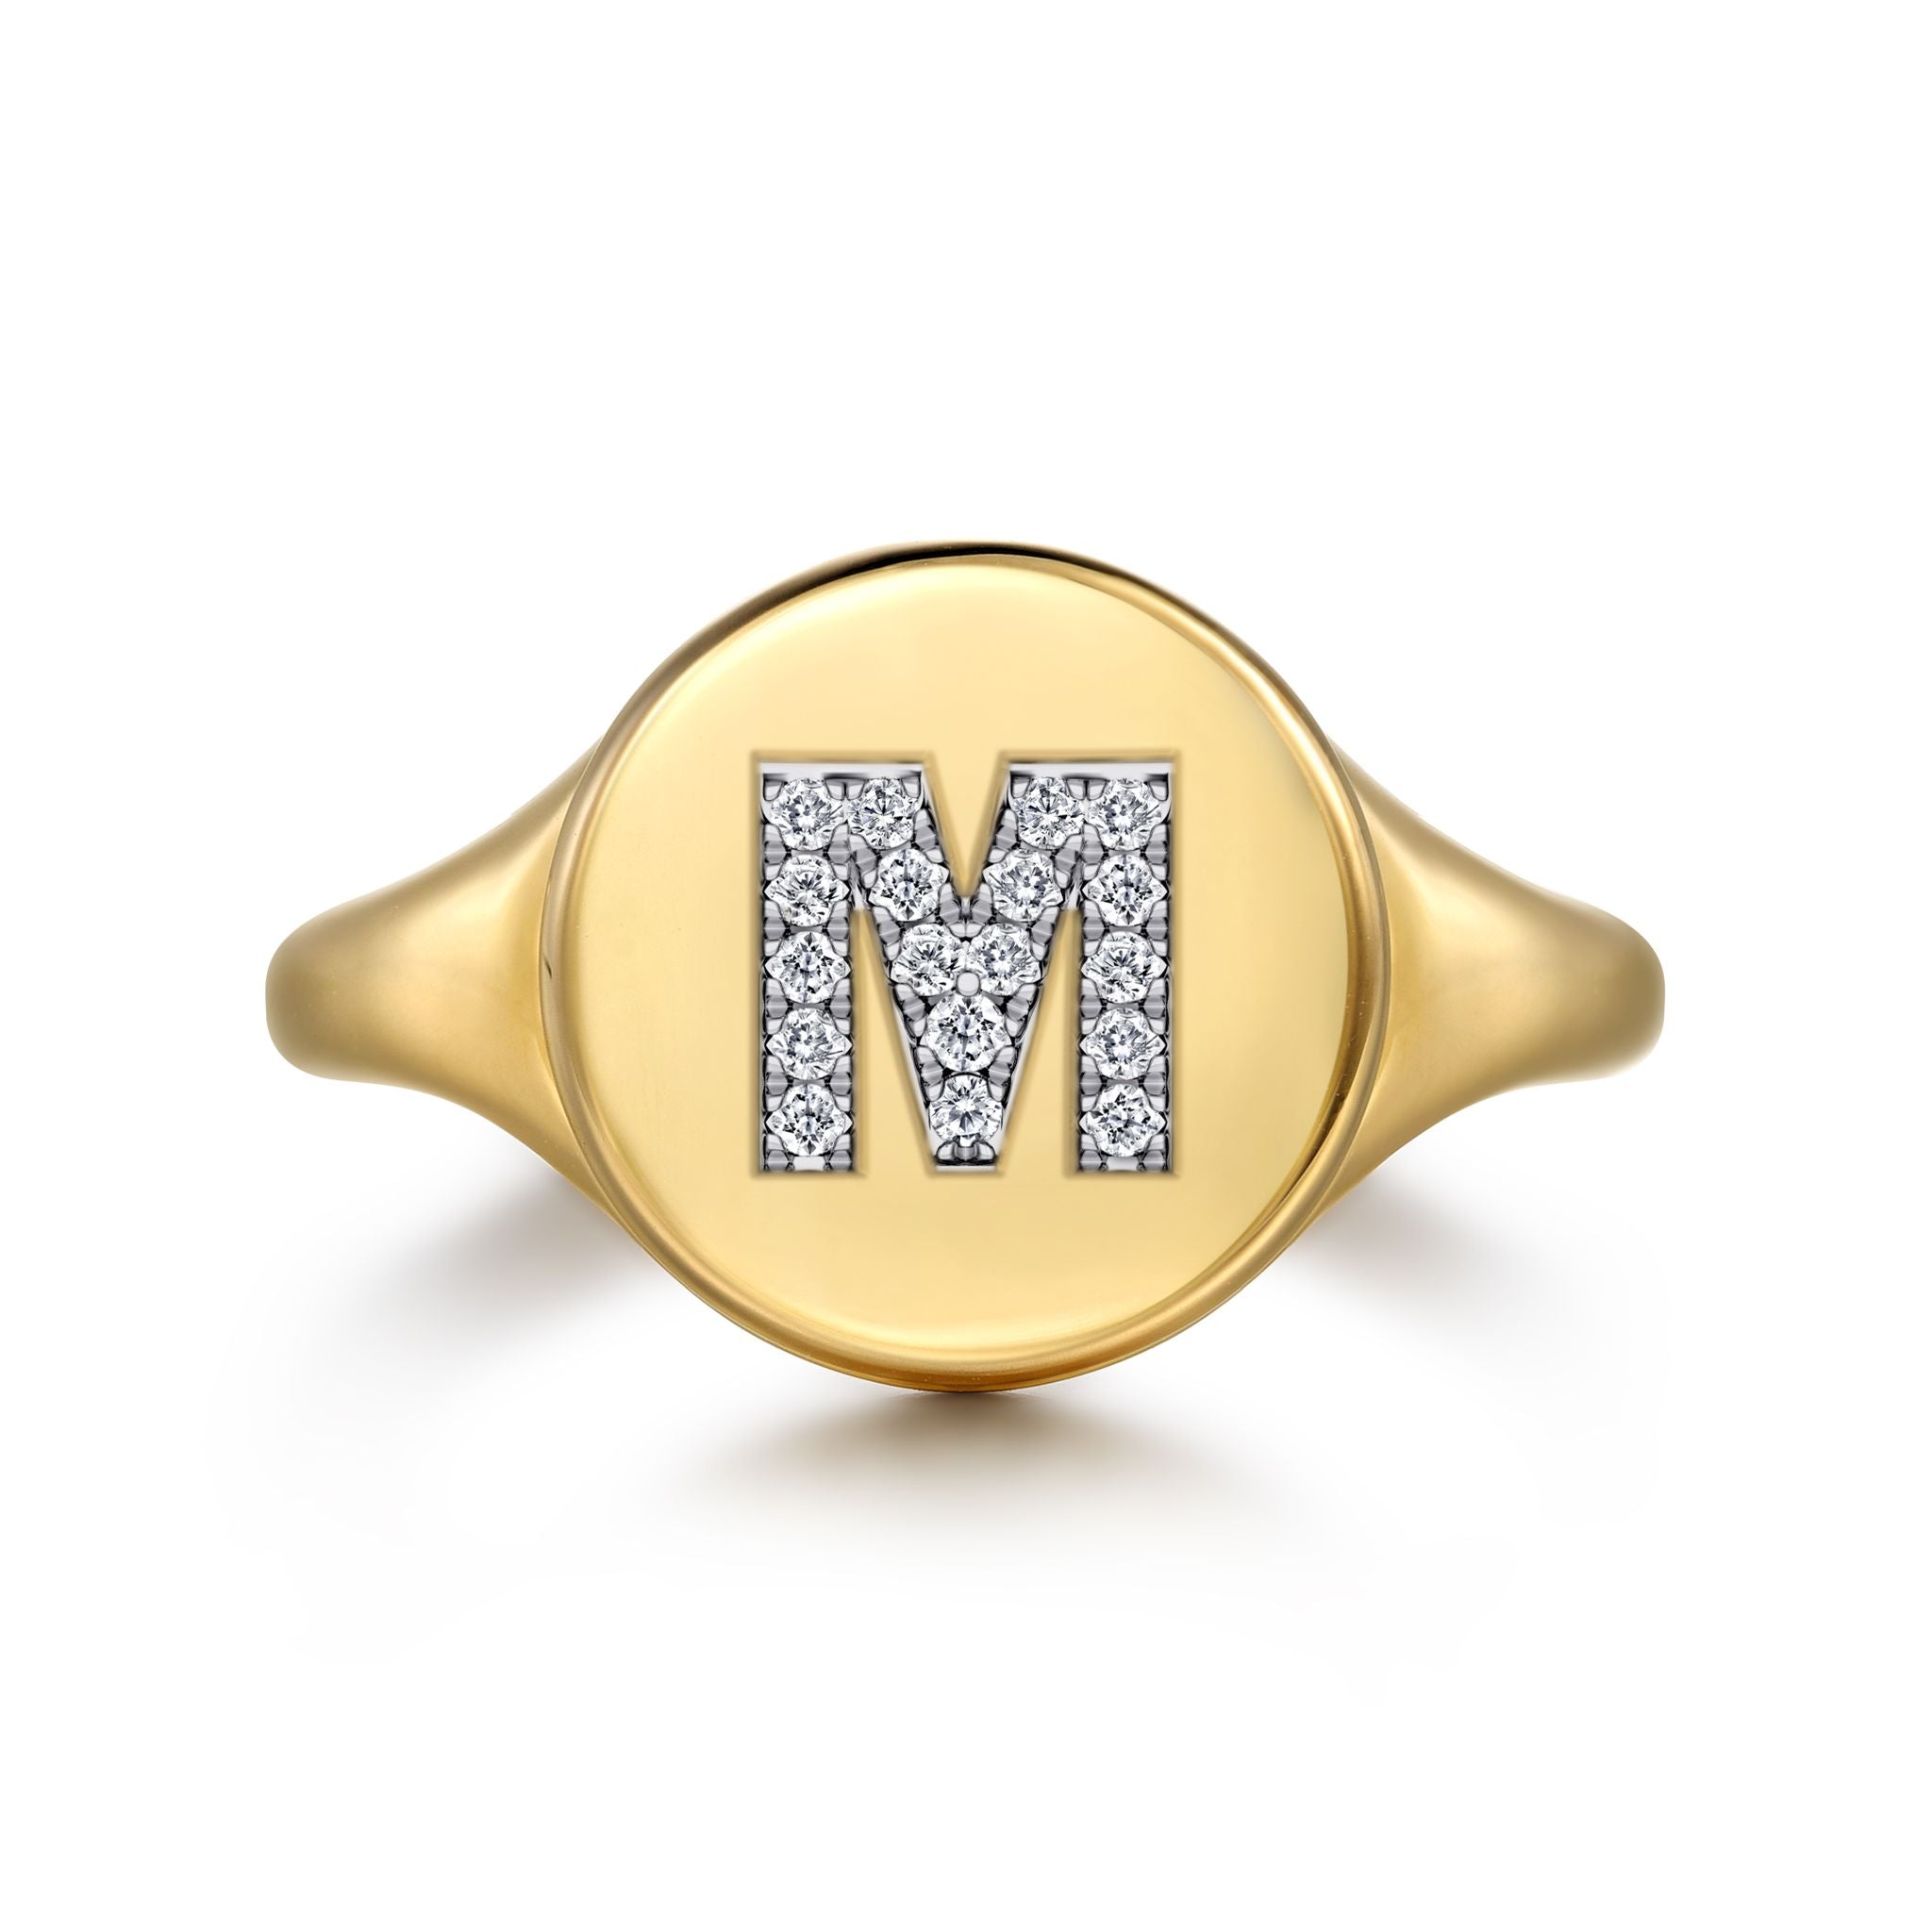 Initial "M" Signet Ring